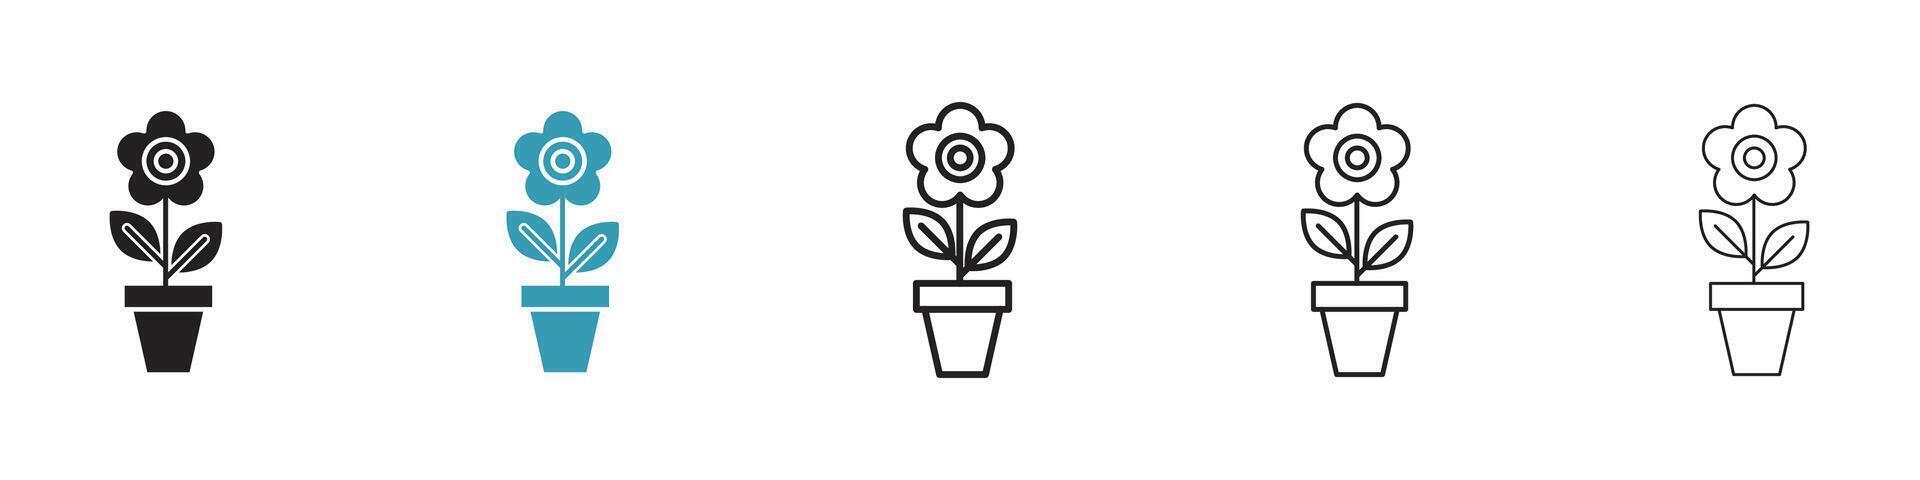 Flowerpot icon set vector